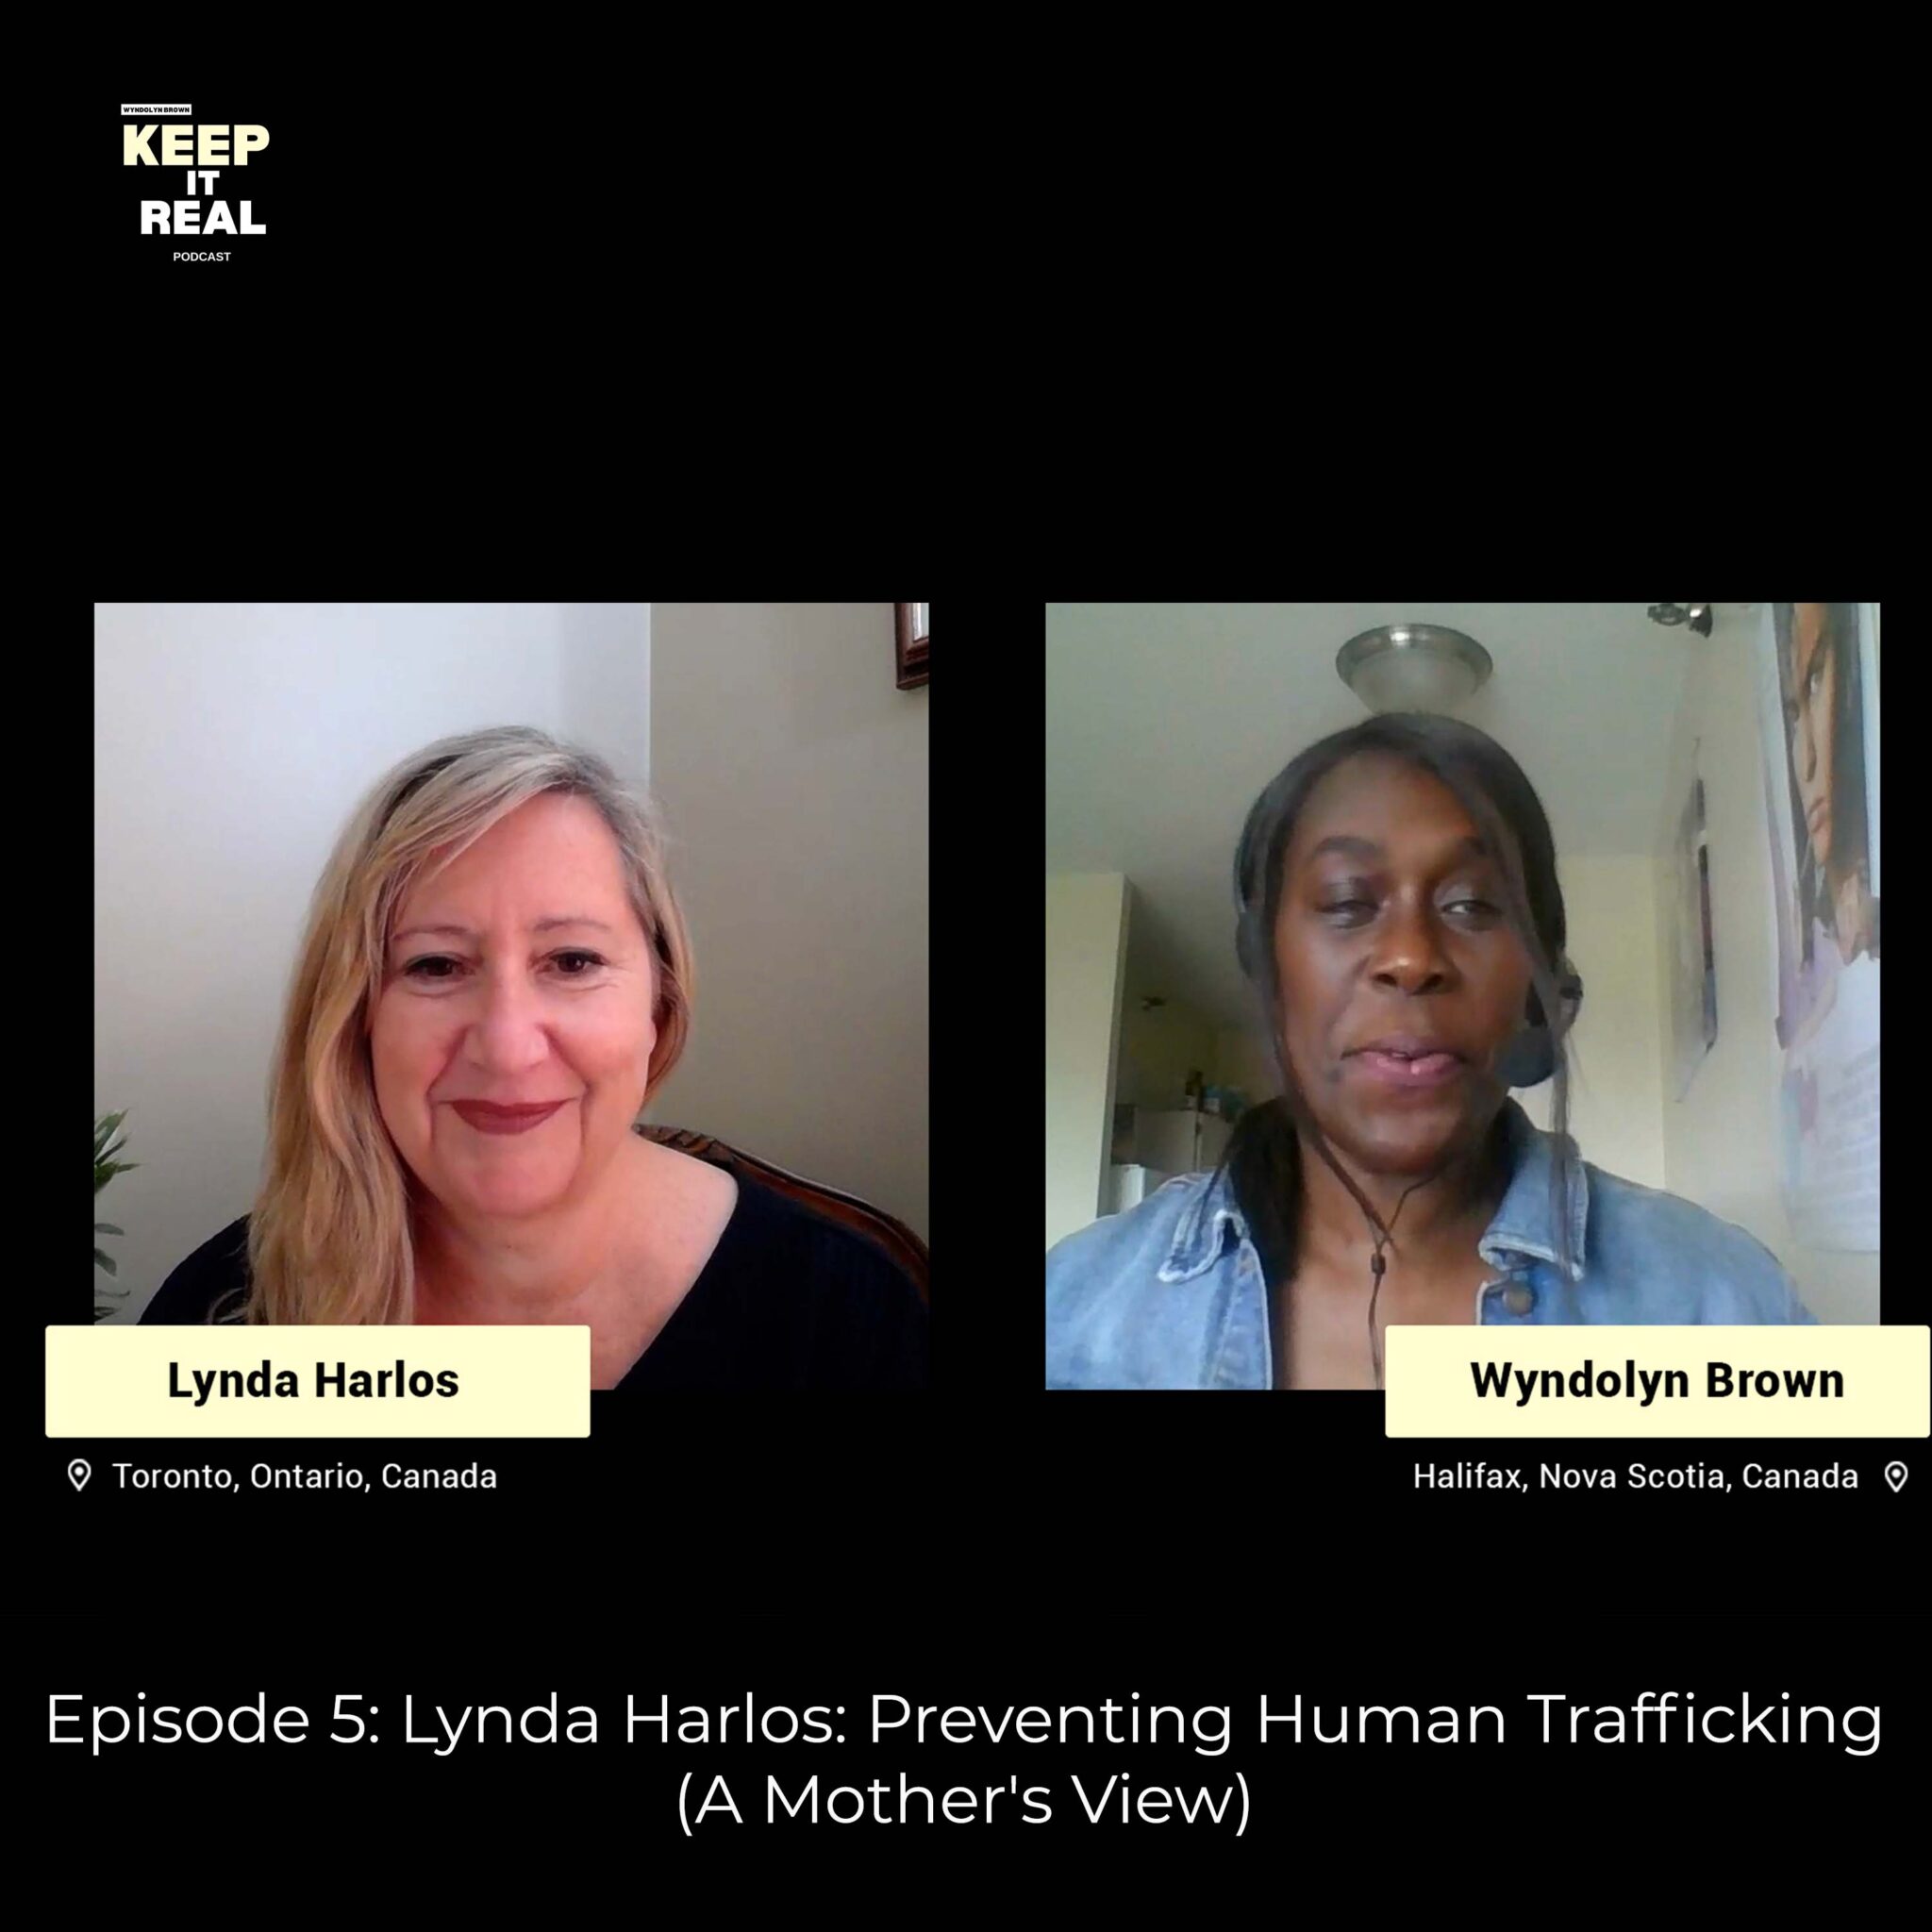 Human Trafficking event